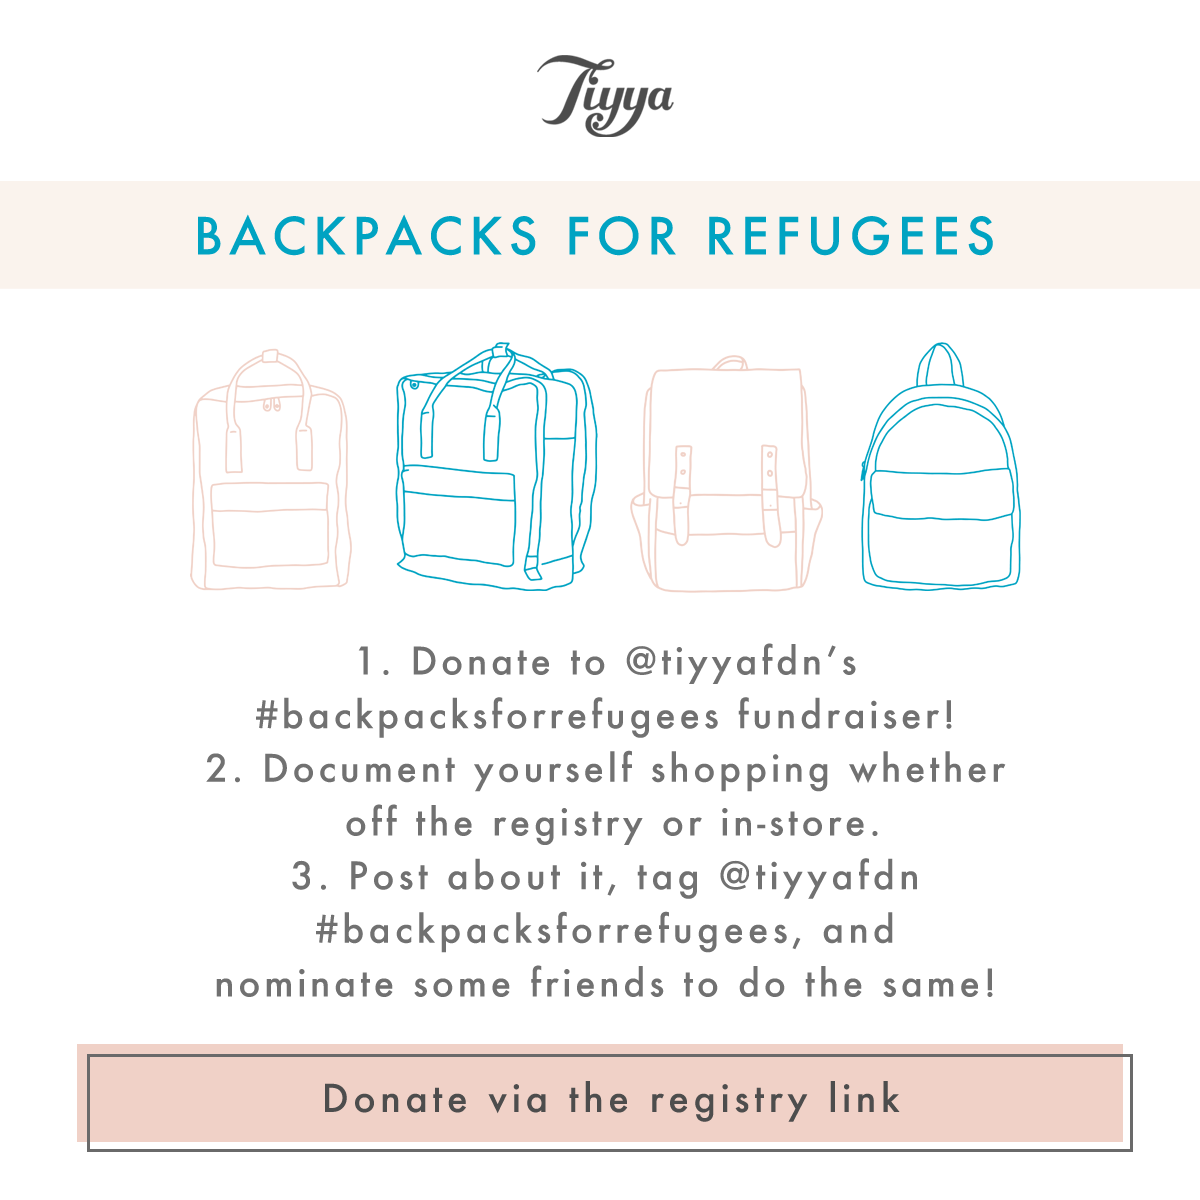 Backpacks for Refugees - 100 Layer Cakelet